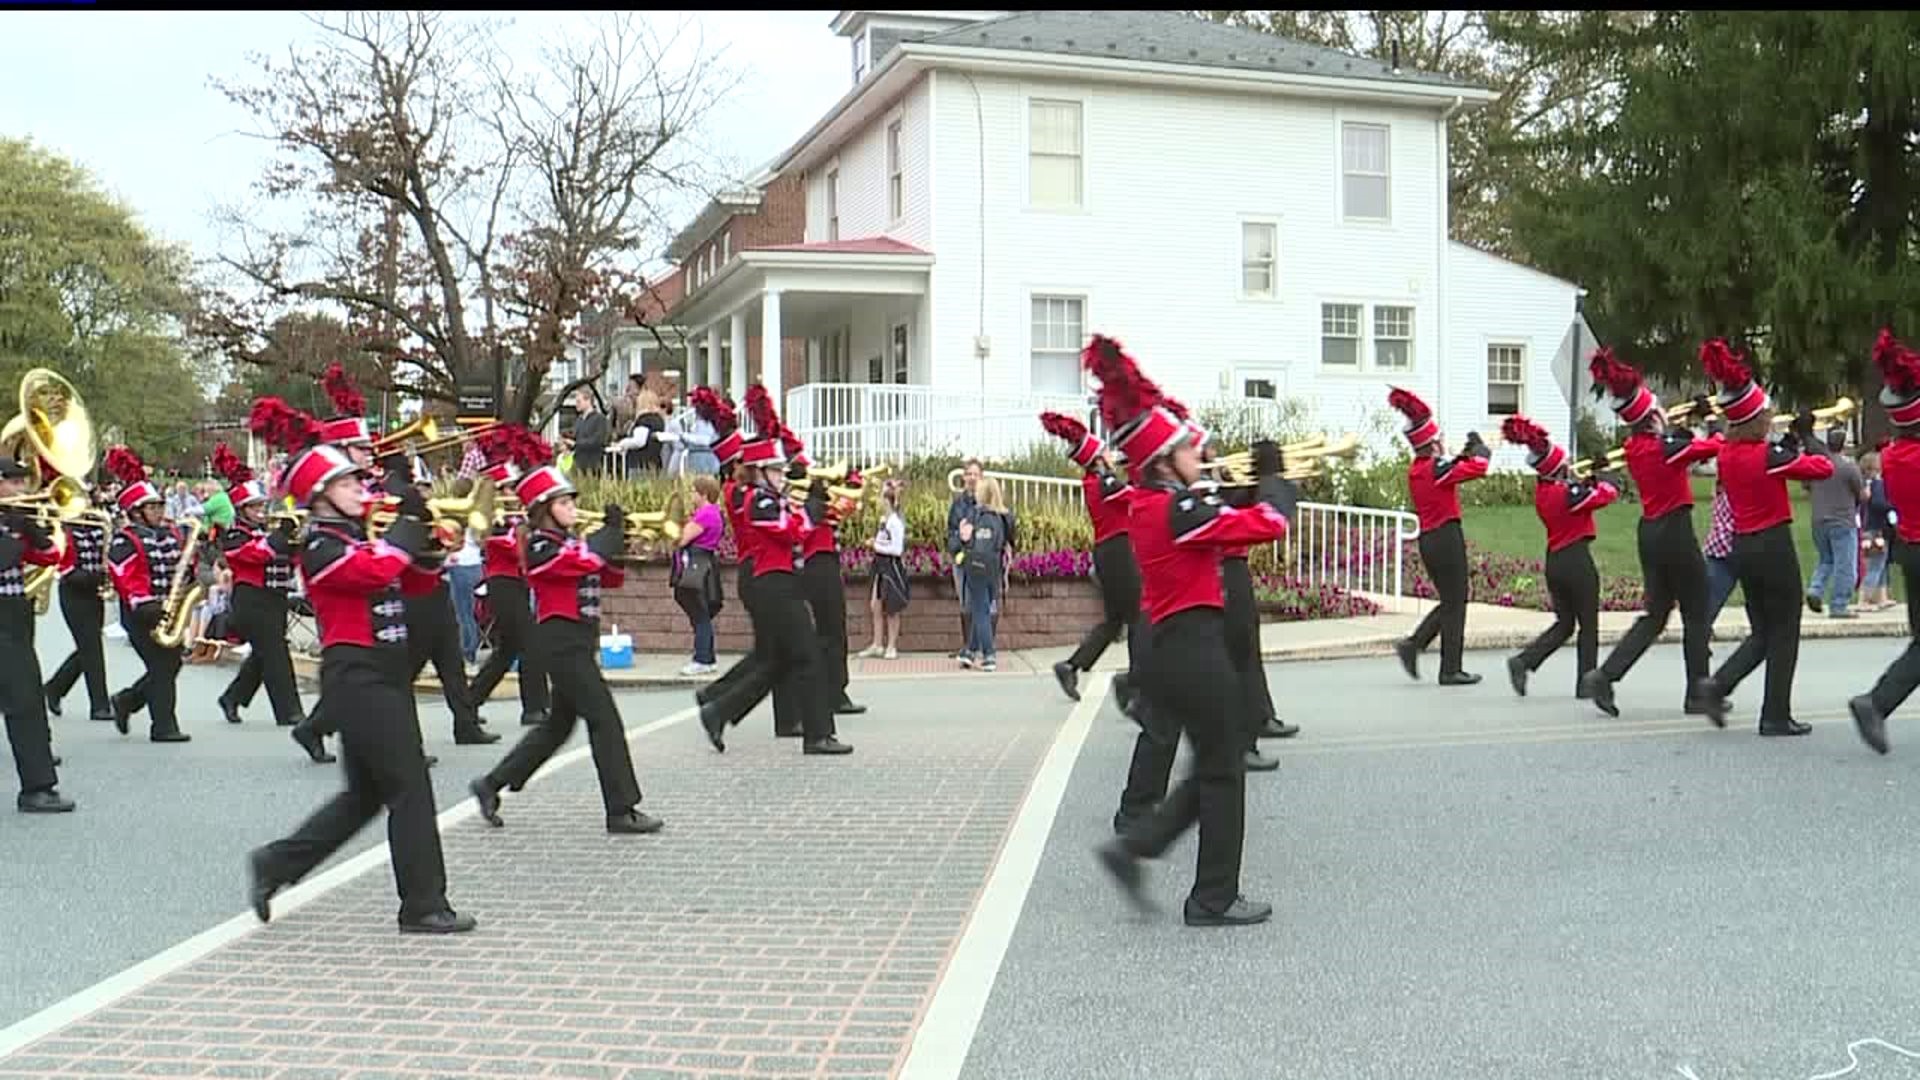 Vietnam War Veterans honored at parade in Lancaster County